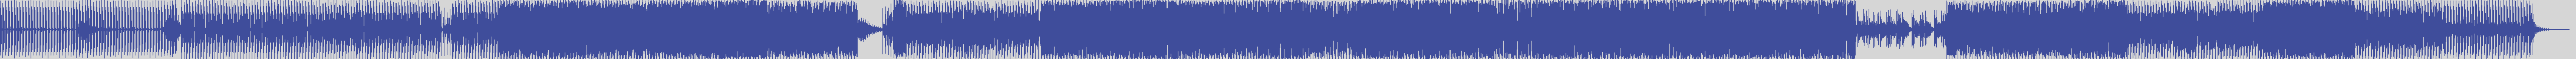 atomic_recordings [AR019] Mowree - Closer [Aggression Mix] audio wave form